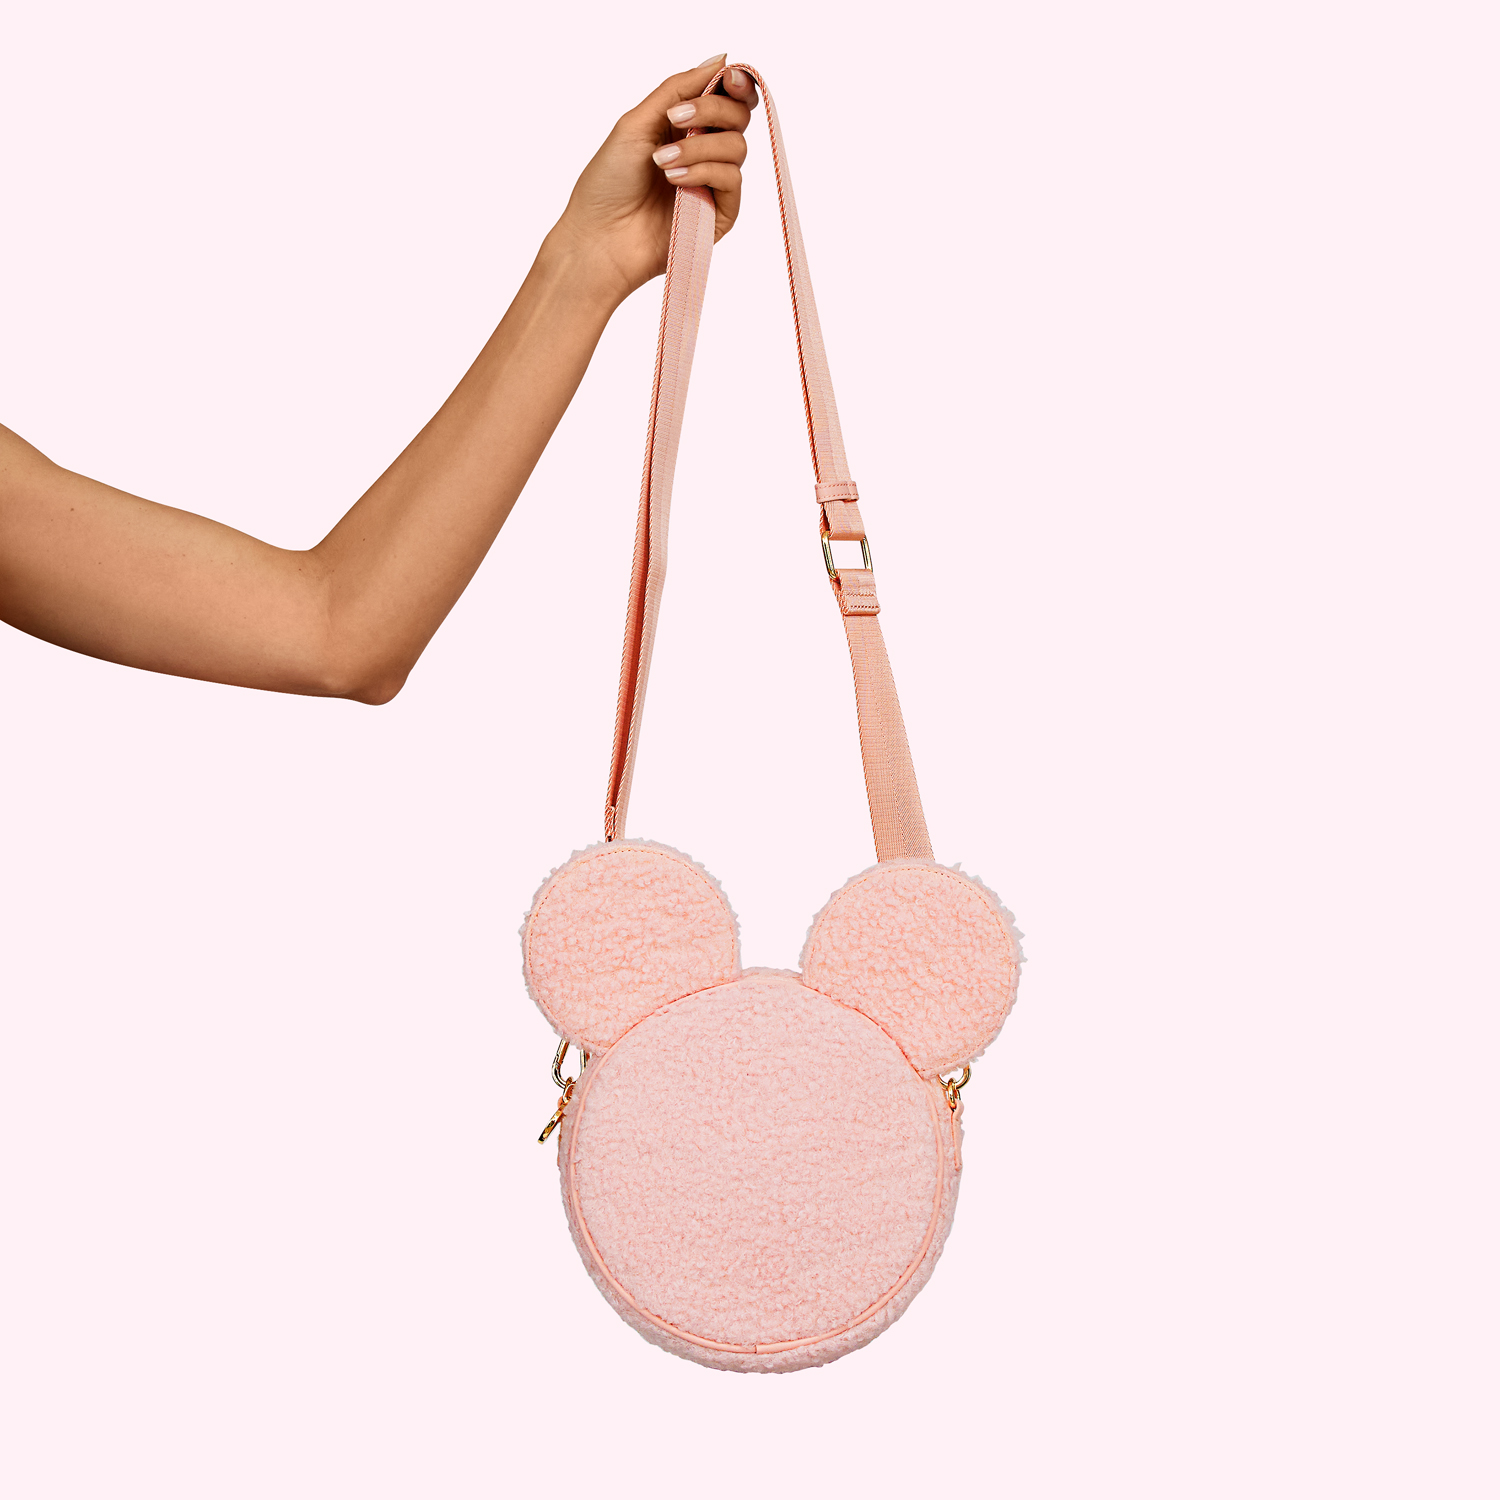 Disney Bag | Mickey Mouse Cross Body Bag | Cartoon Chest Bag | Funny Bag |  Bolsas, Acessórios louis vuitton, Bolsa da disney